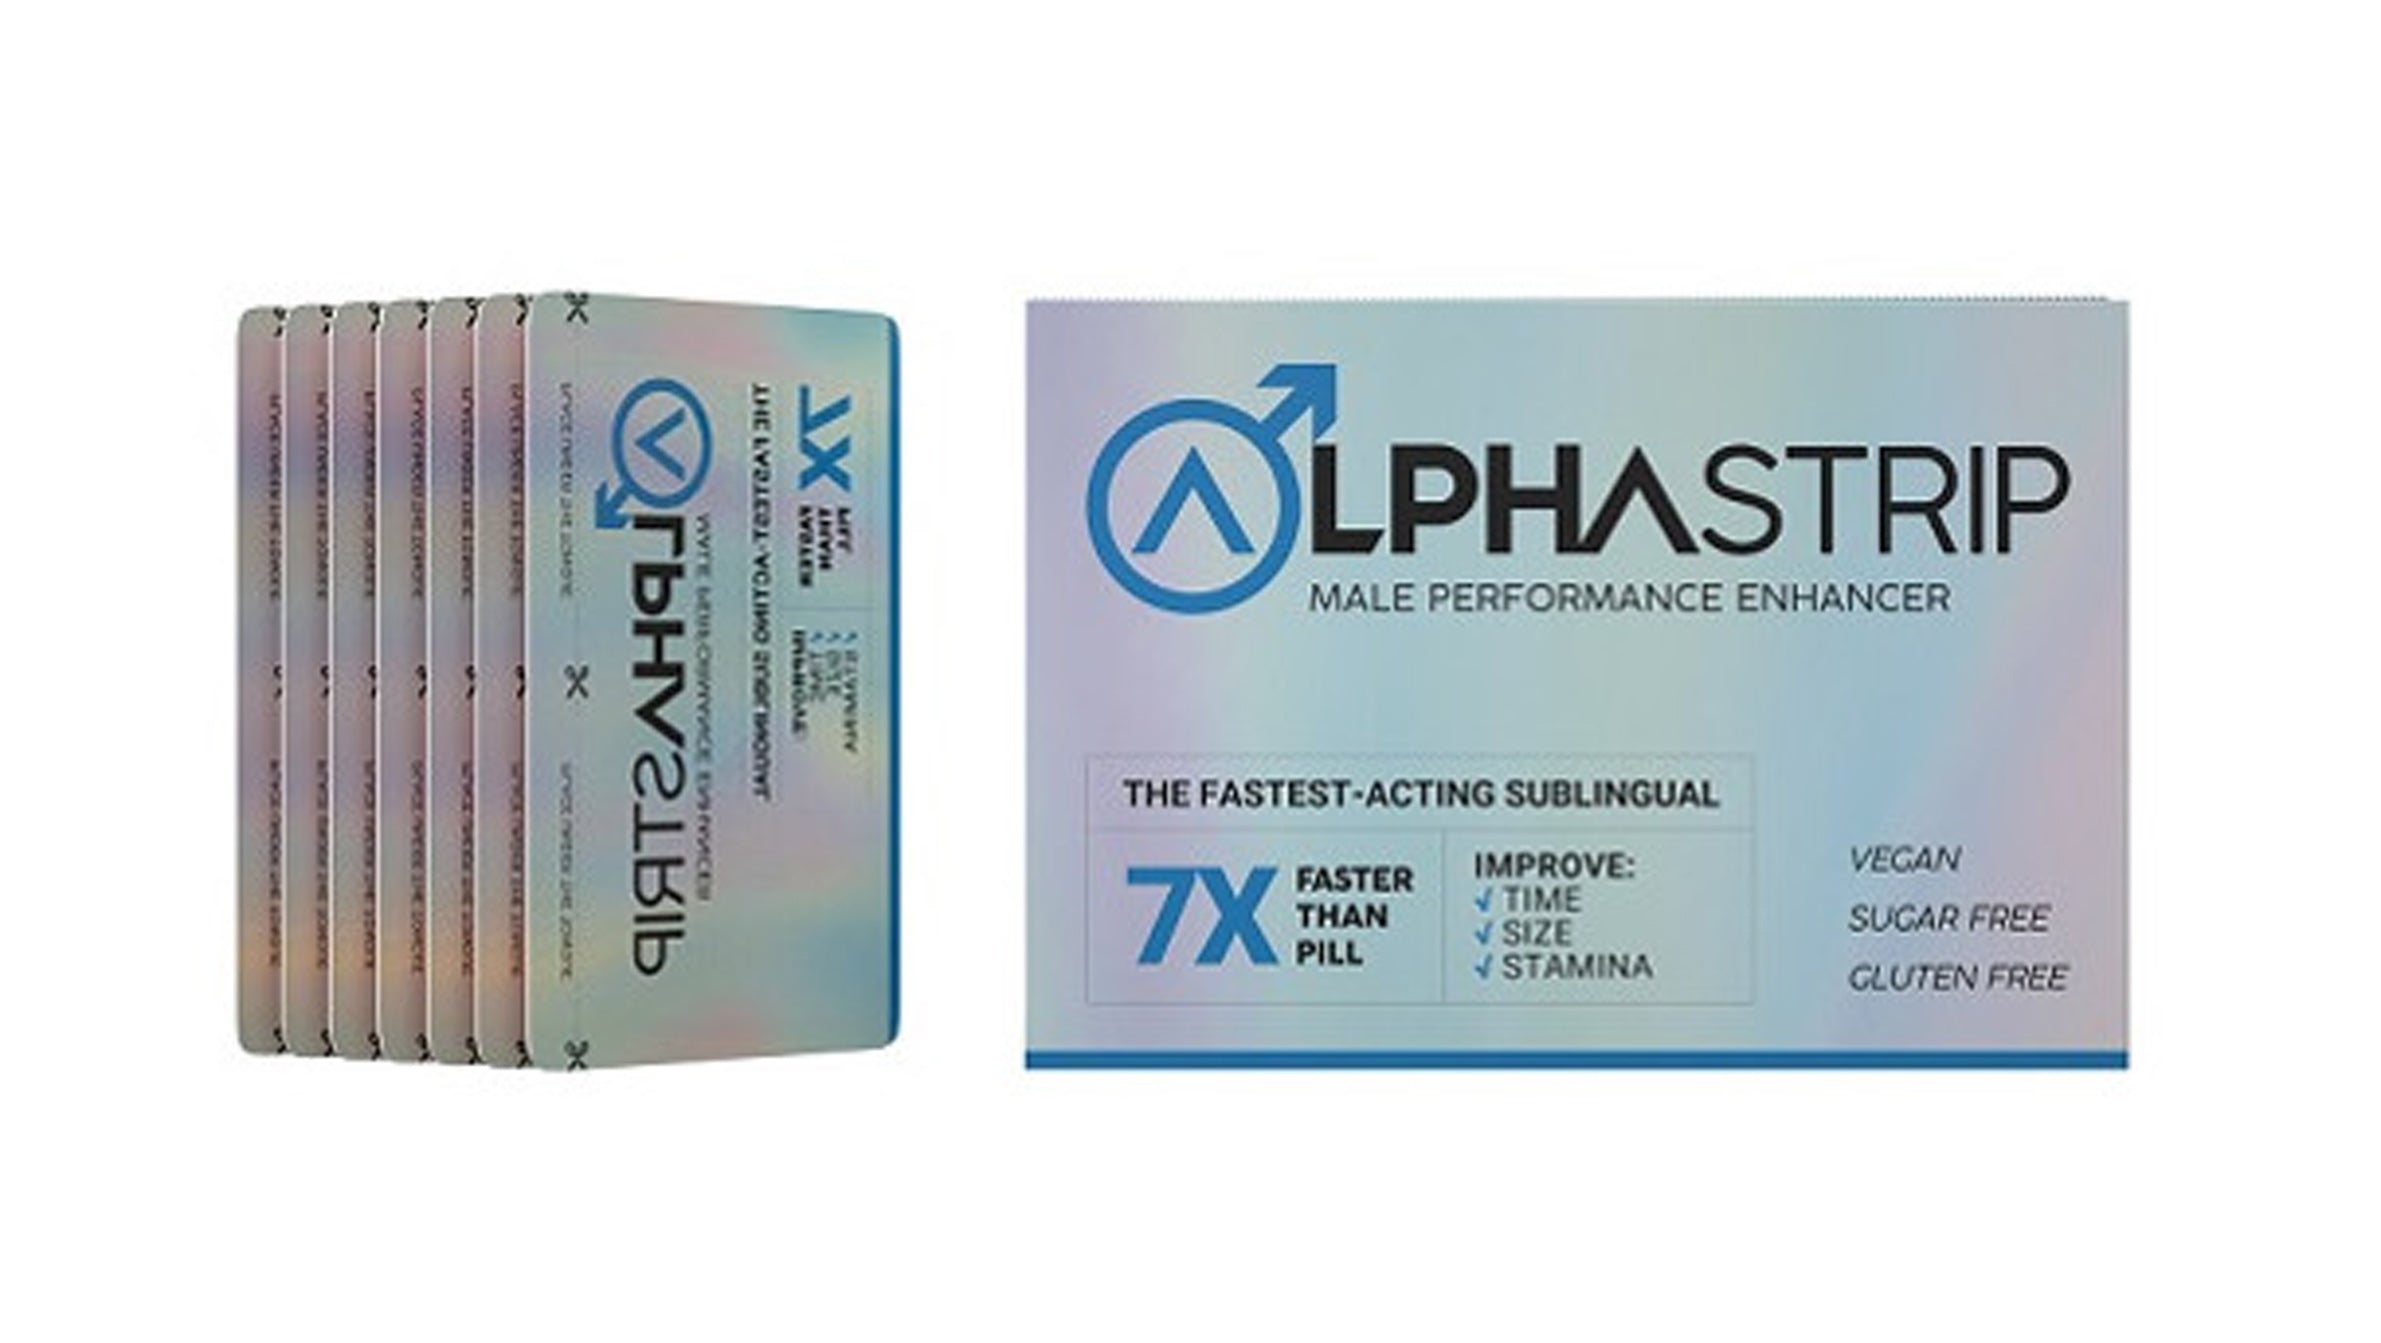 Alphastrip Male Enhancer 36 Ct Display-0